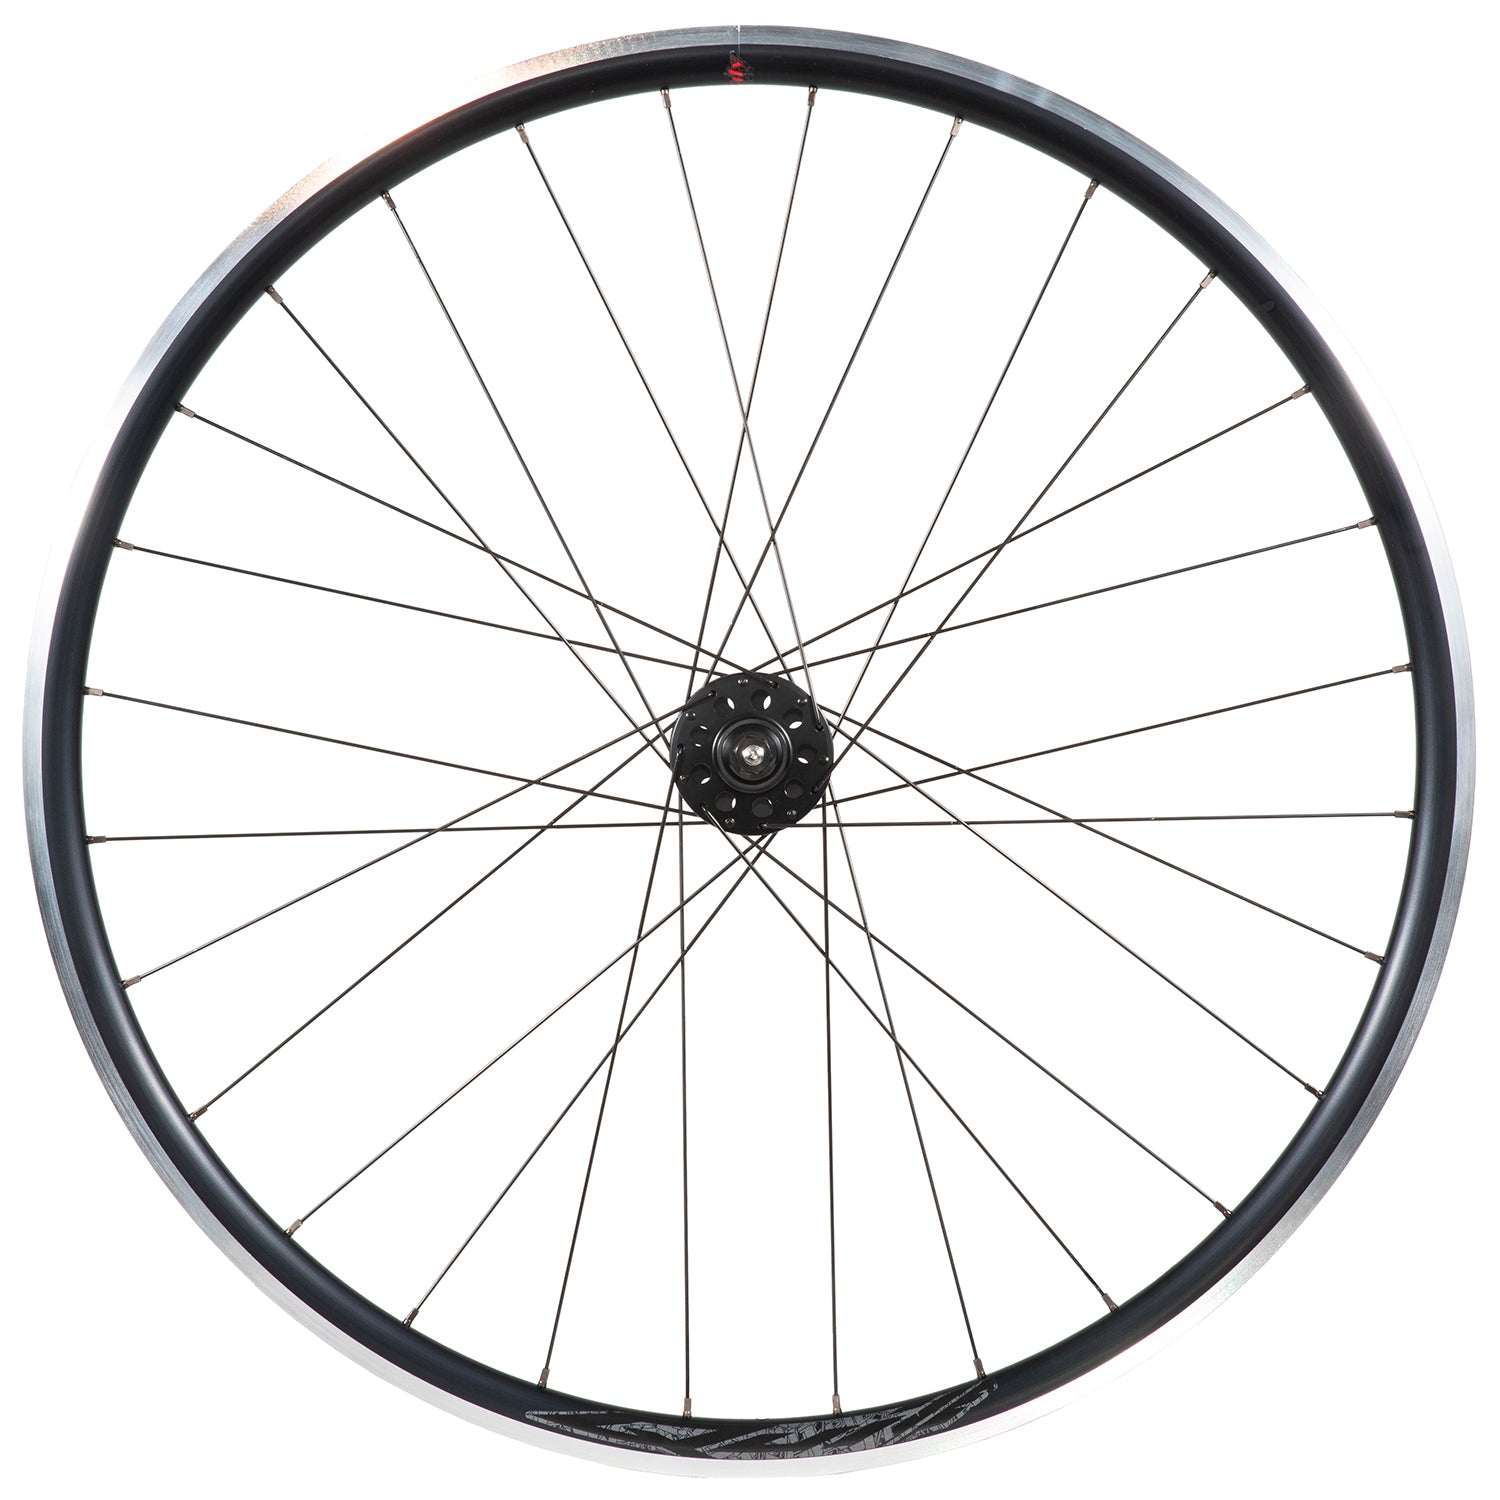 GORILLA SPUN Build Wheel [VELOCITY Quill x CYCROC Large Flange Black]